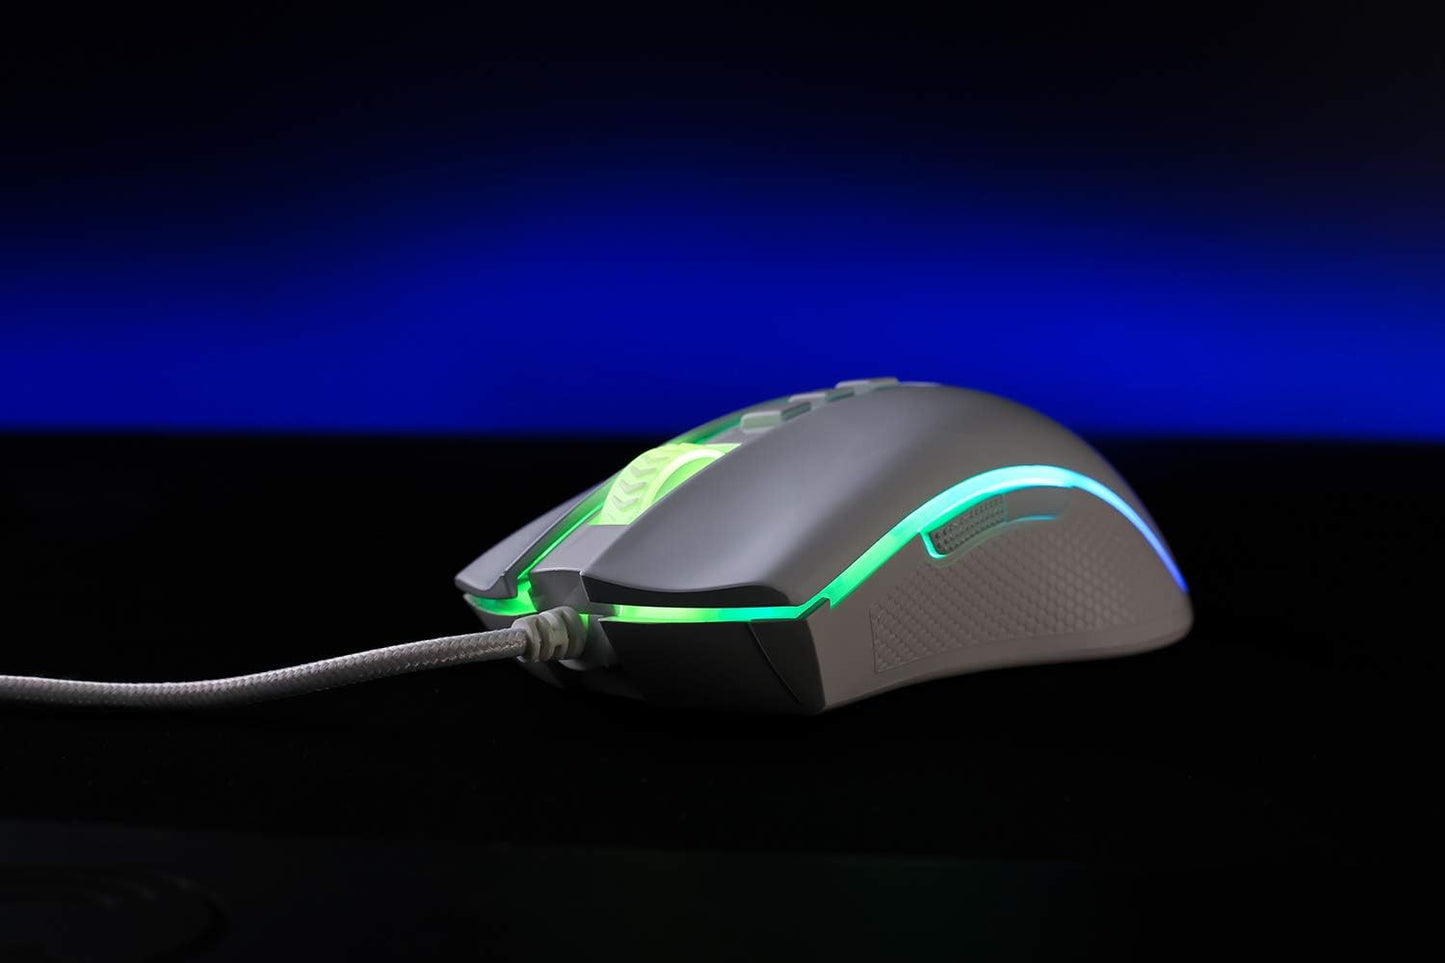 Redragon M711 Cobra Gaming Mouse